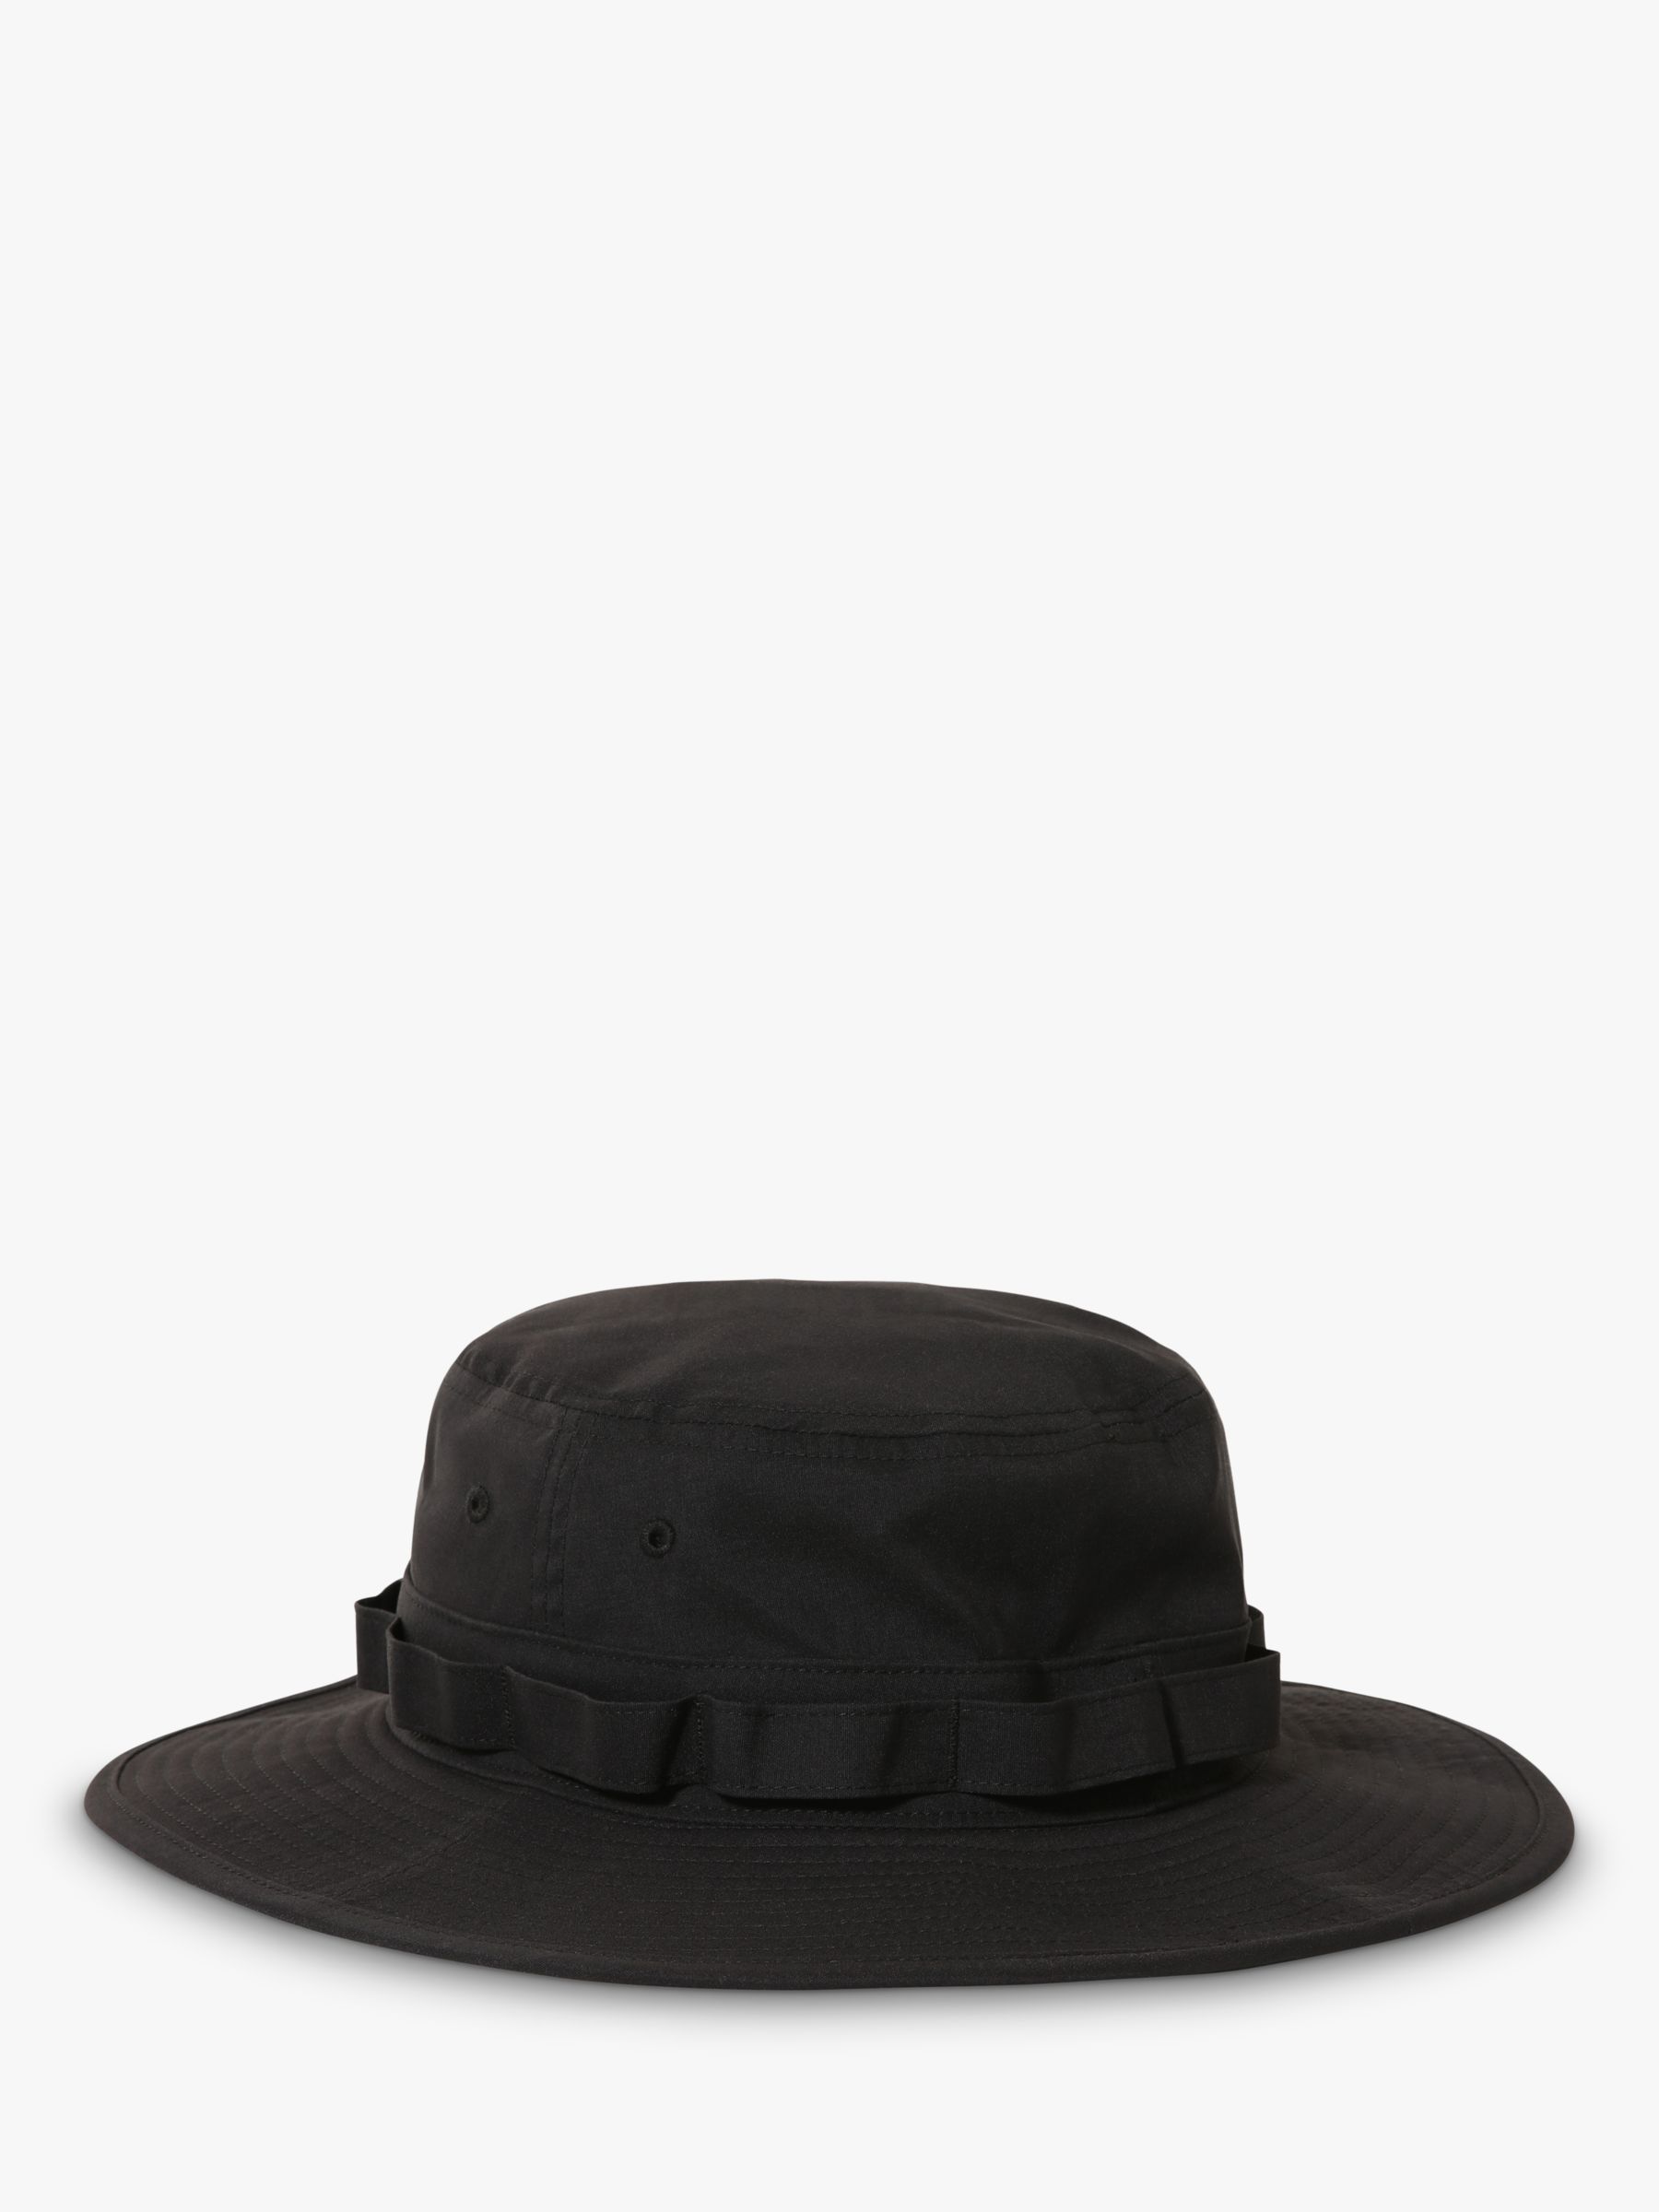 Buy The North Face Class V Brimmer Hat, Black Online at johnlewis.com